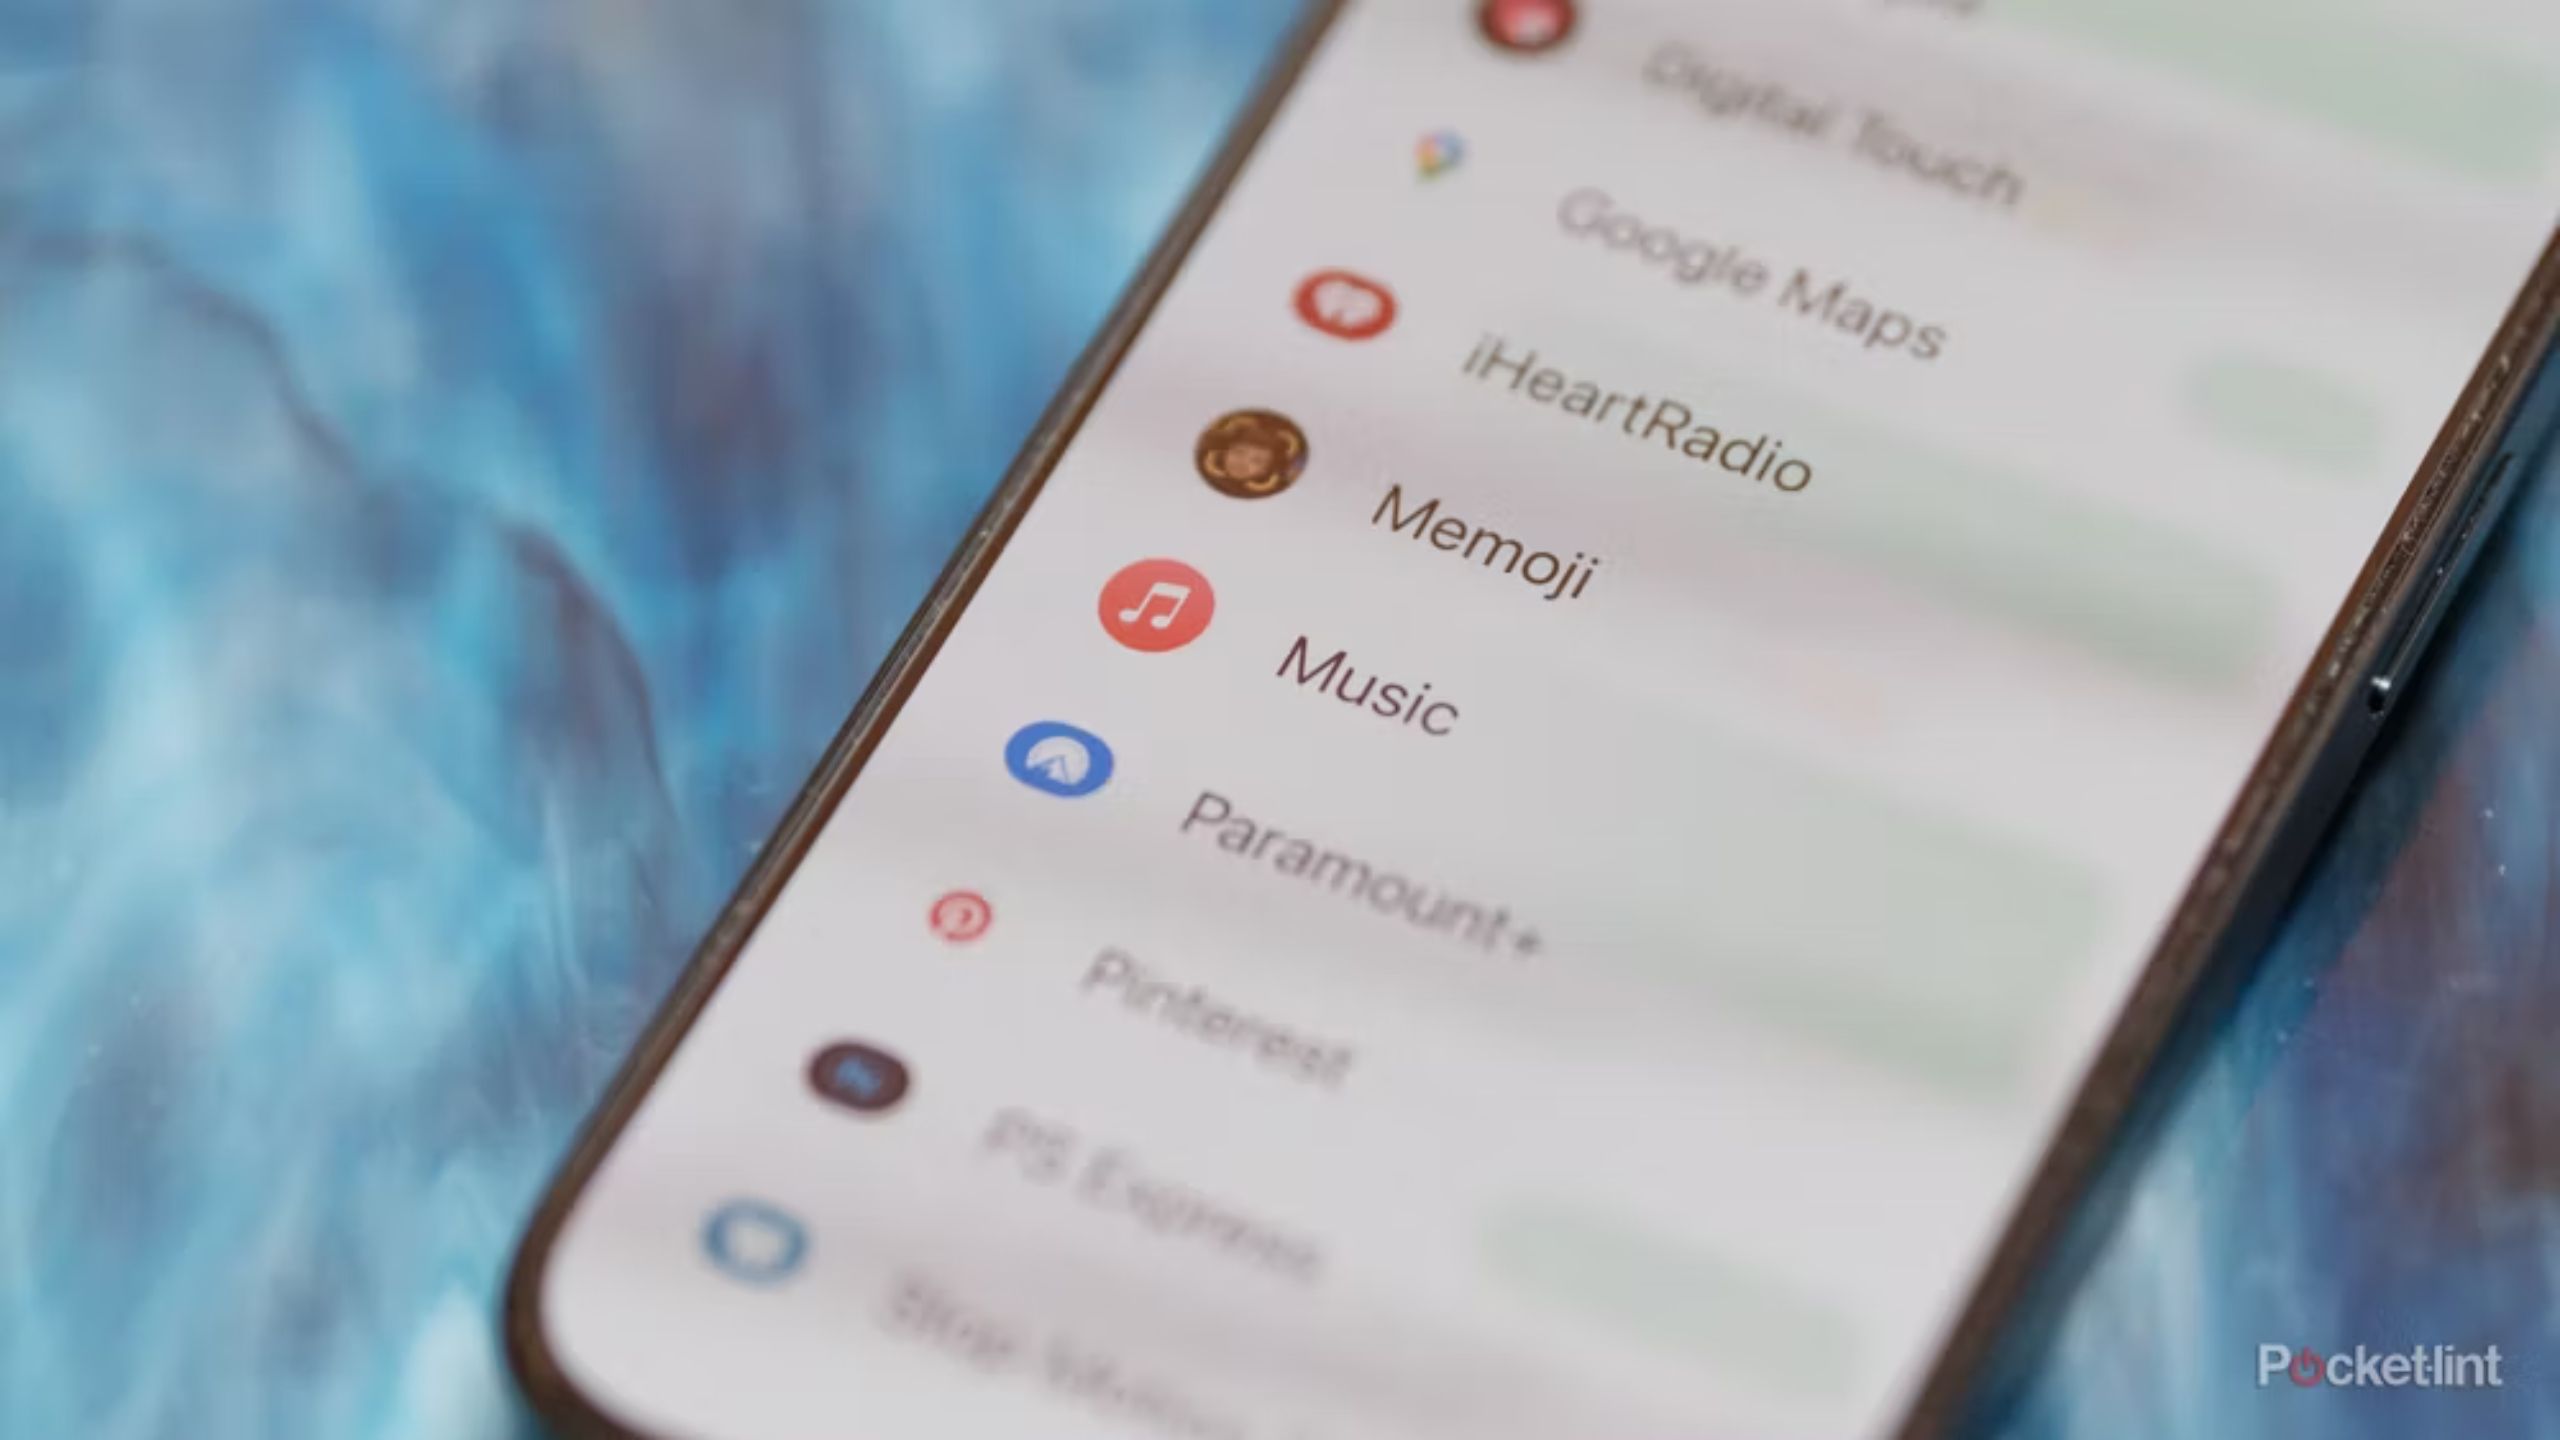 iPhone iMessage menu displaying iHeartRadio, Memoji, Music, and more options. 